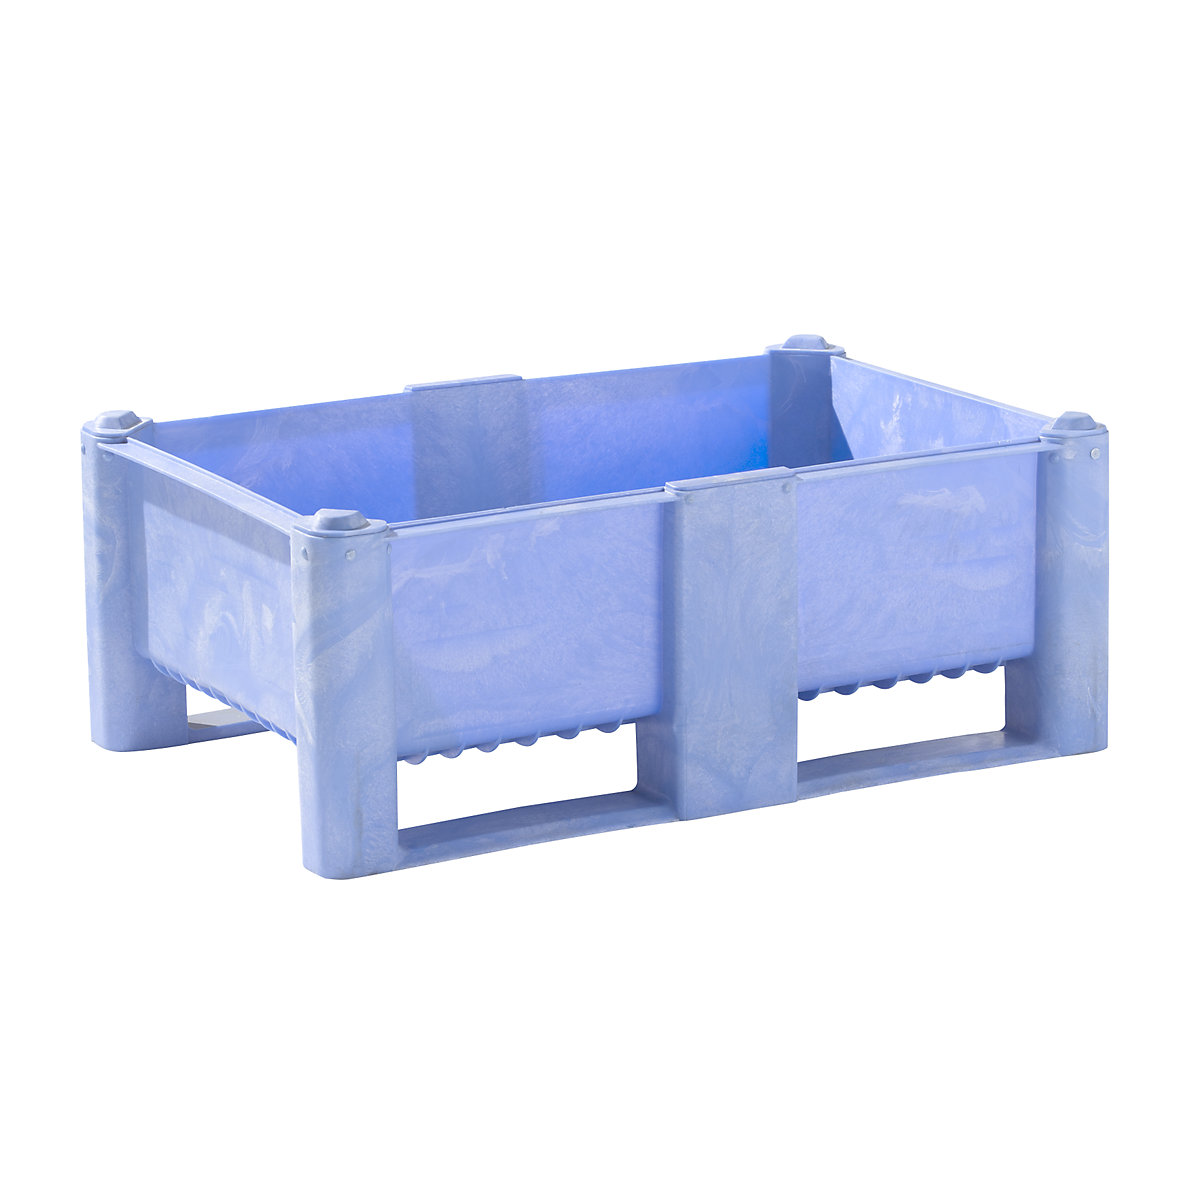 Polyethylene pallet box